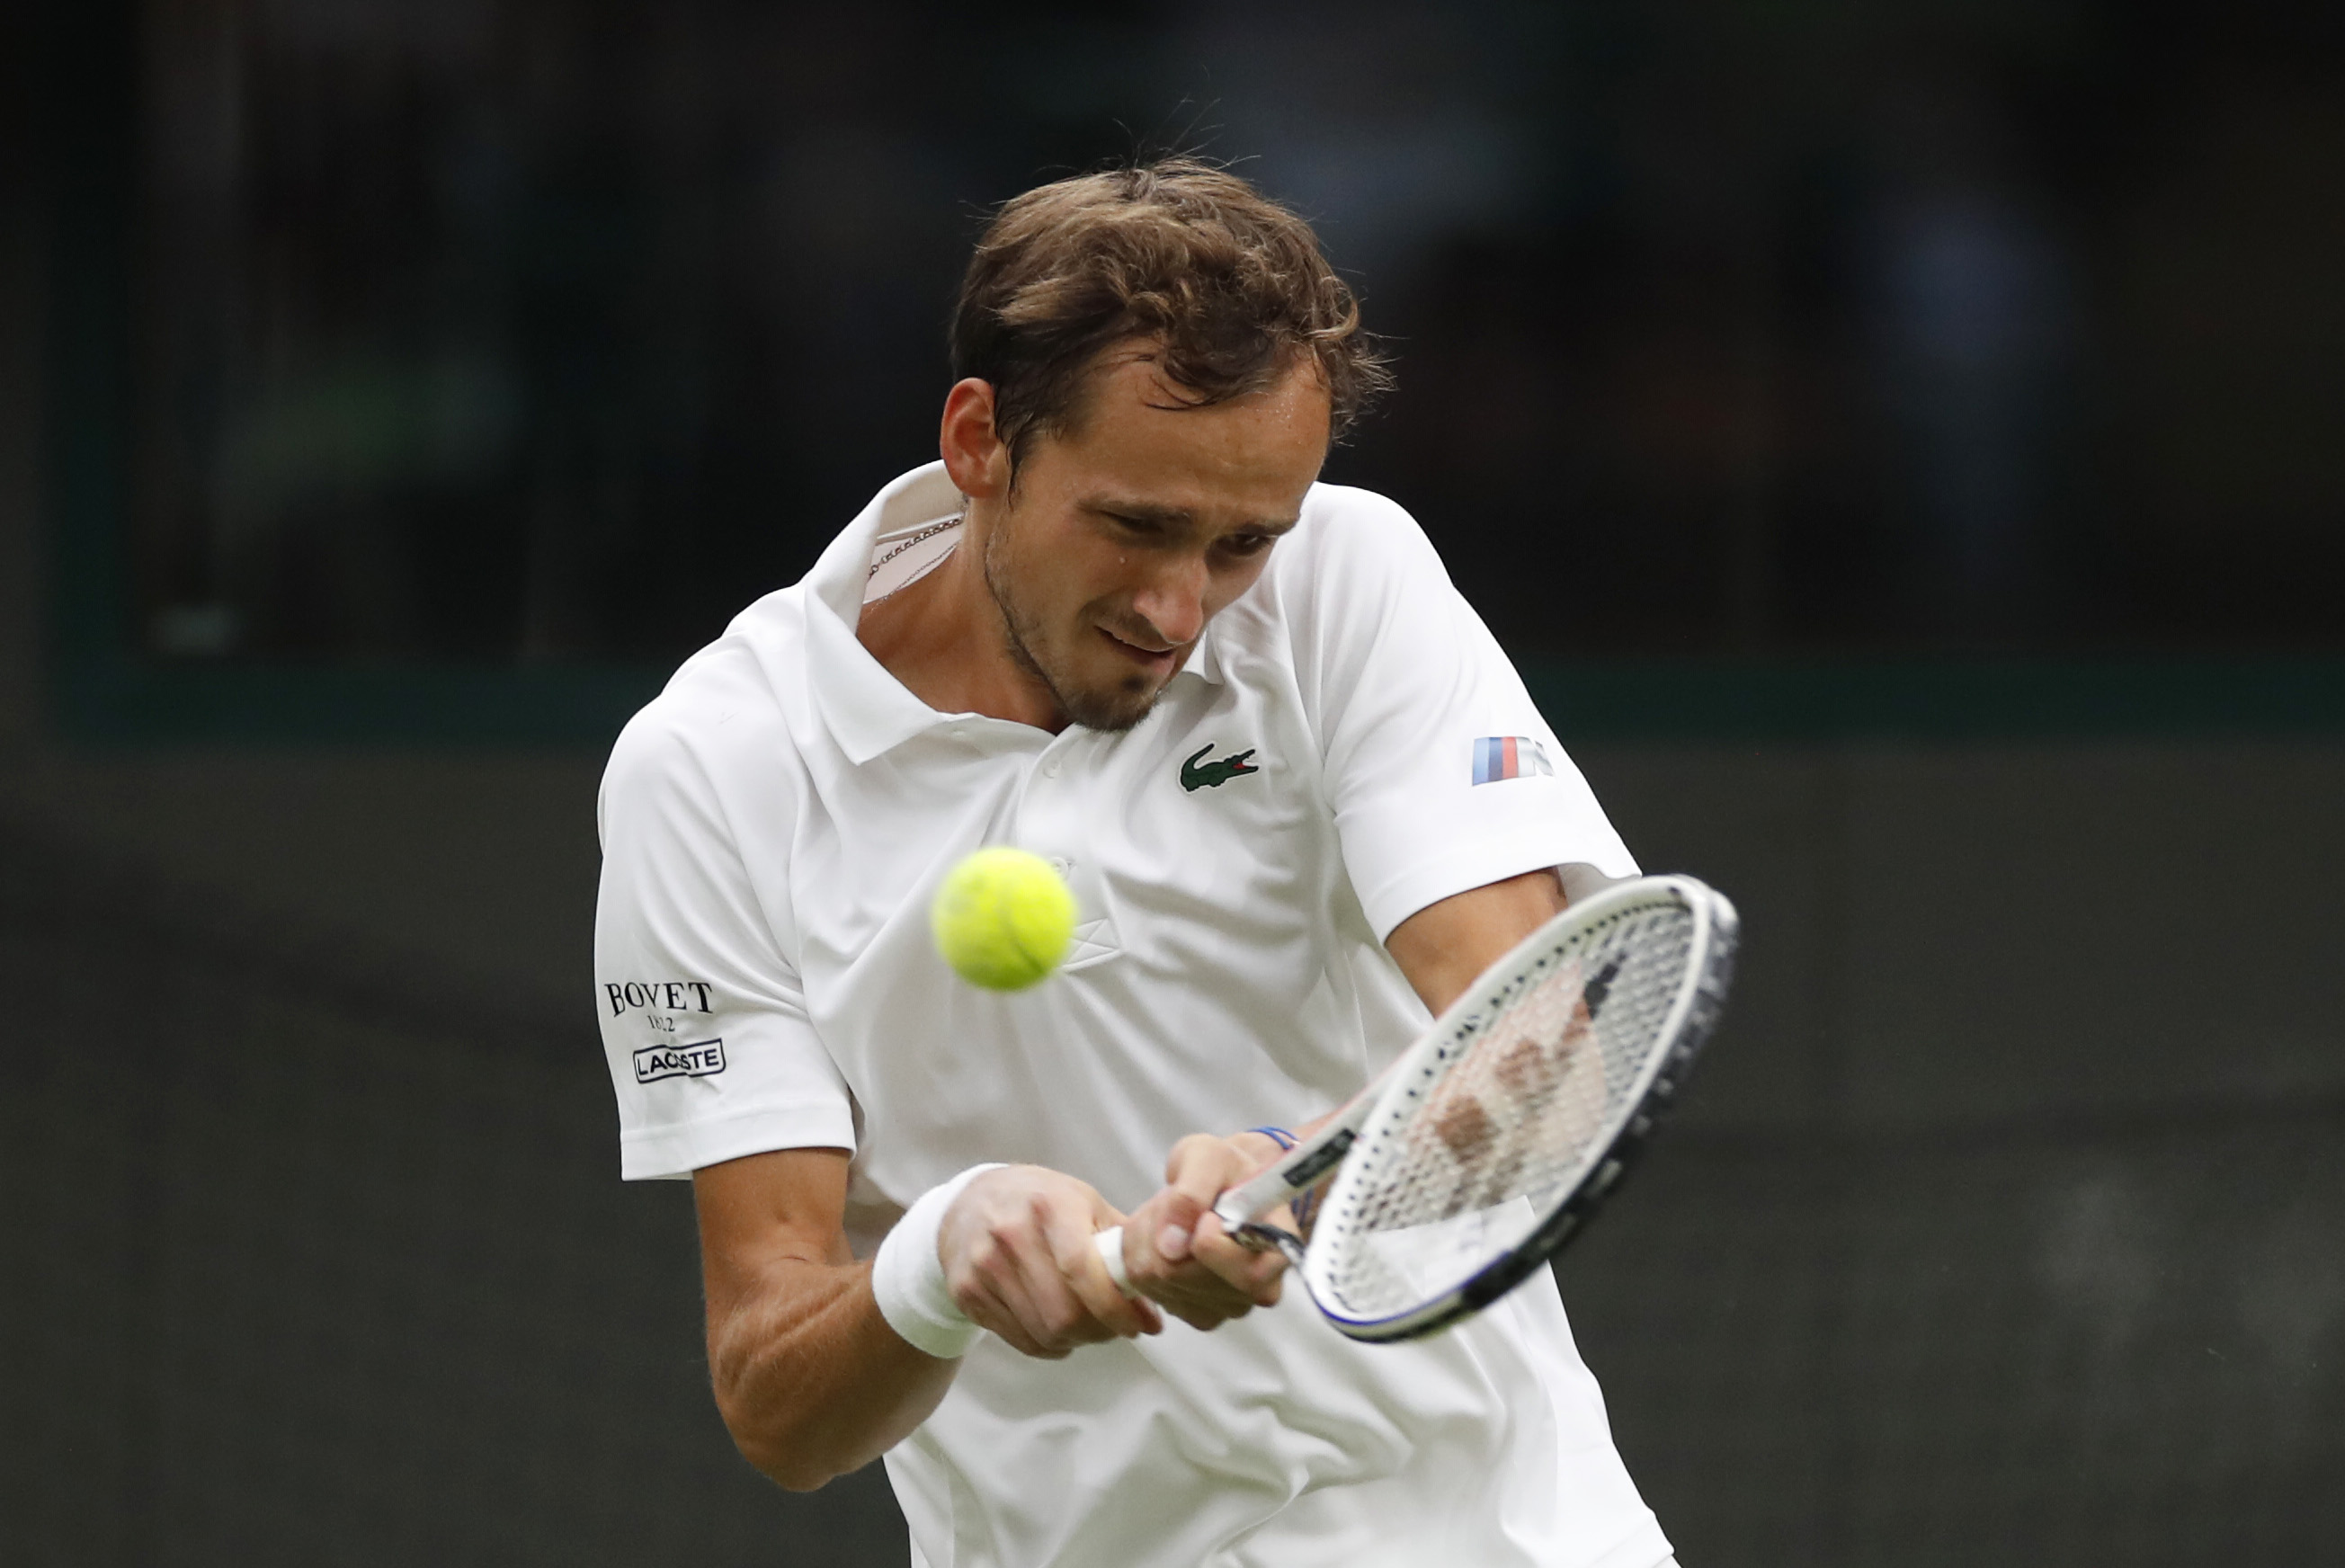 Wimbledon 2021: Federer ends British hopes in men's draw, Zverev advances